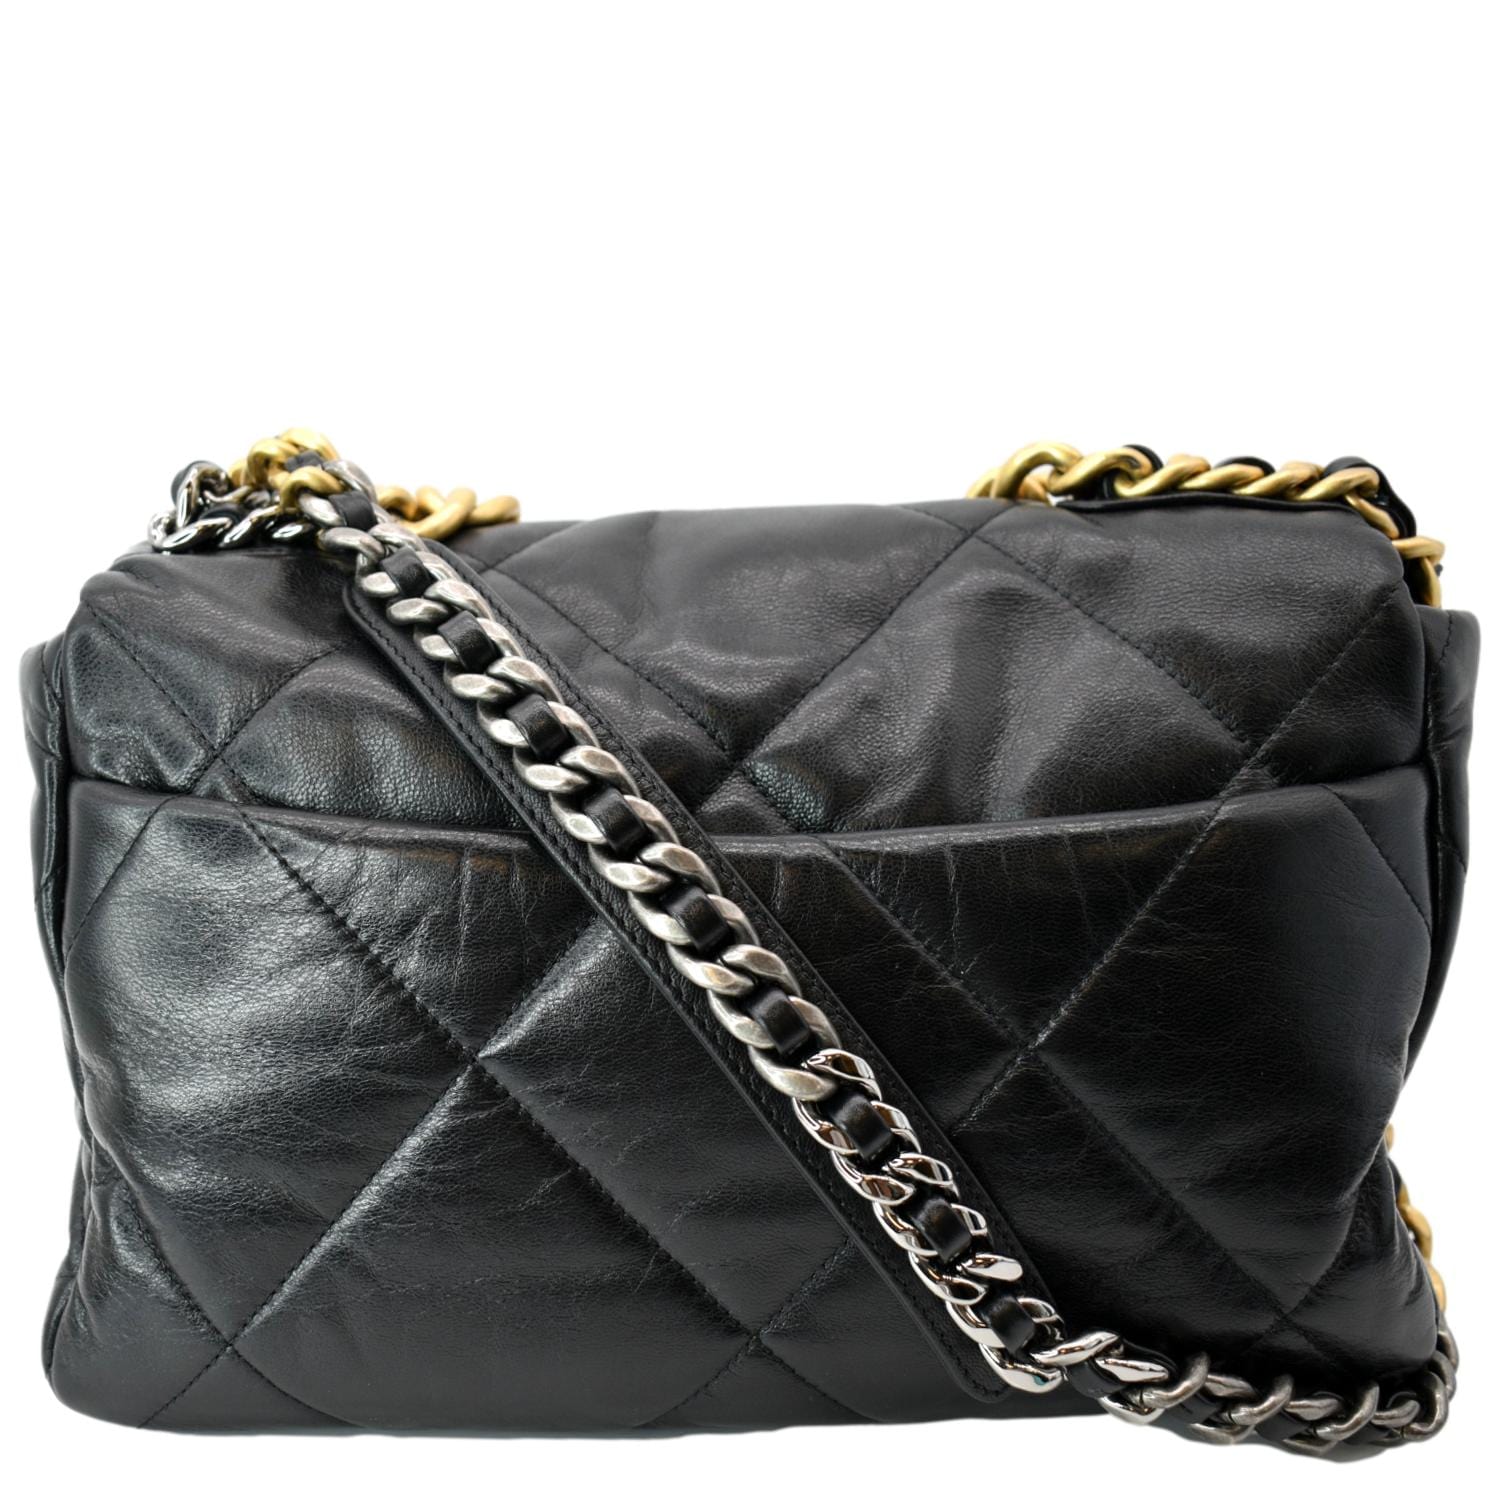 Chanel 19 FW fashion #handbag  Chanel 19 bag, Chanel bag, Bags